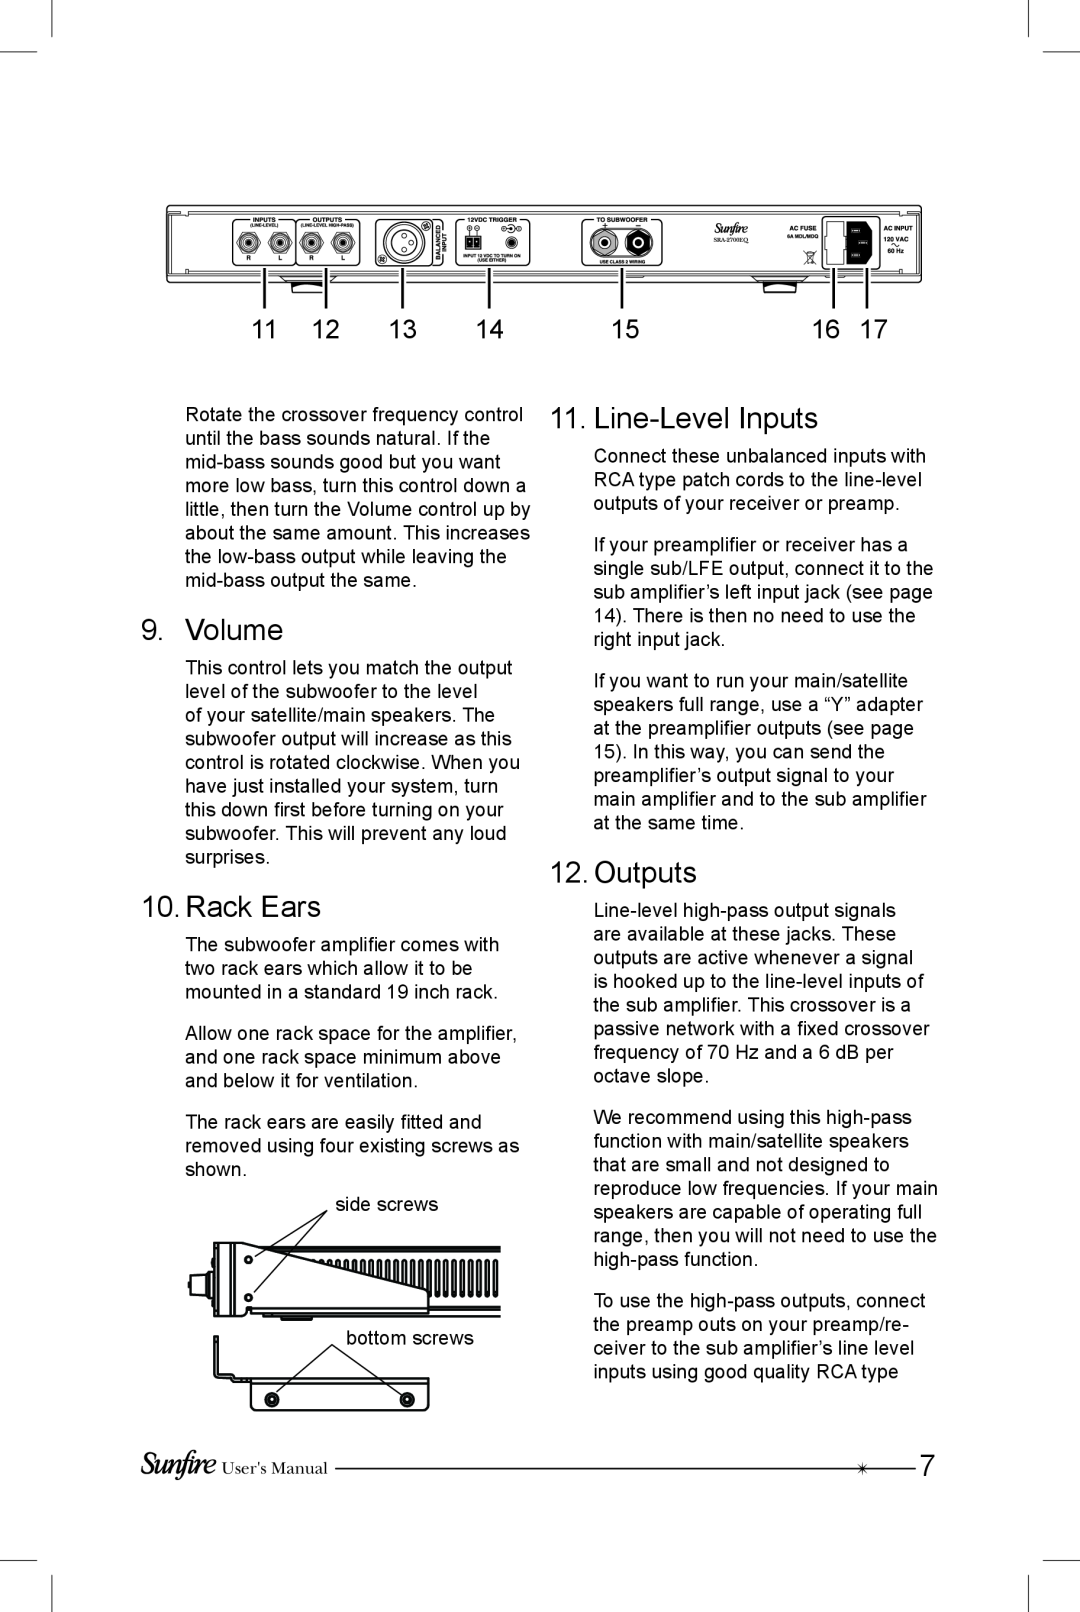 Sunfire SRS-210R manual Volume, Rack Ears, Line-LevelInputs, Outputs 